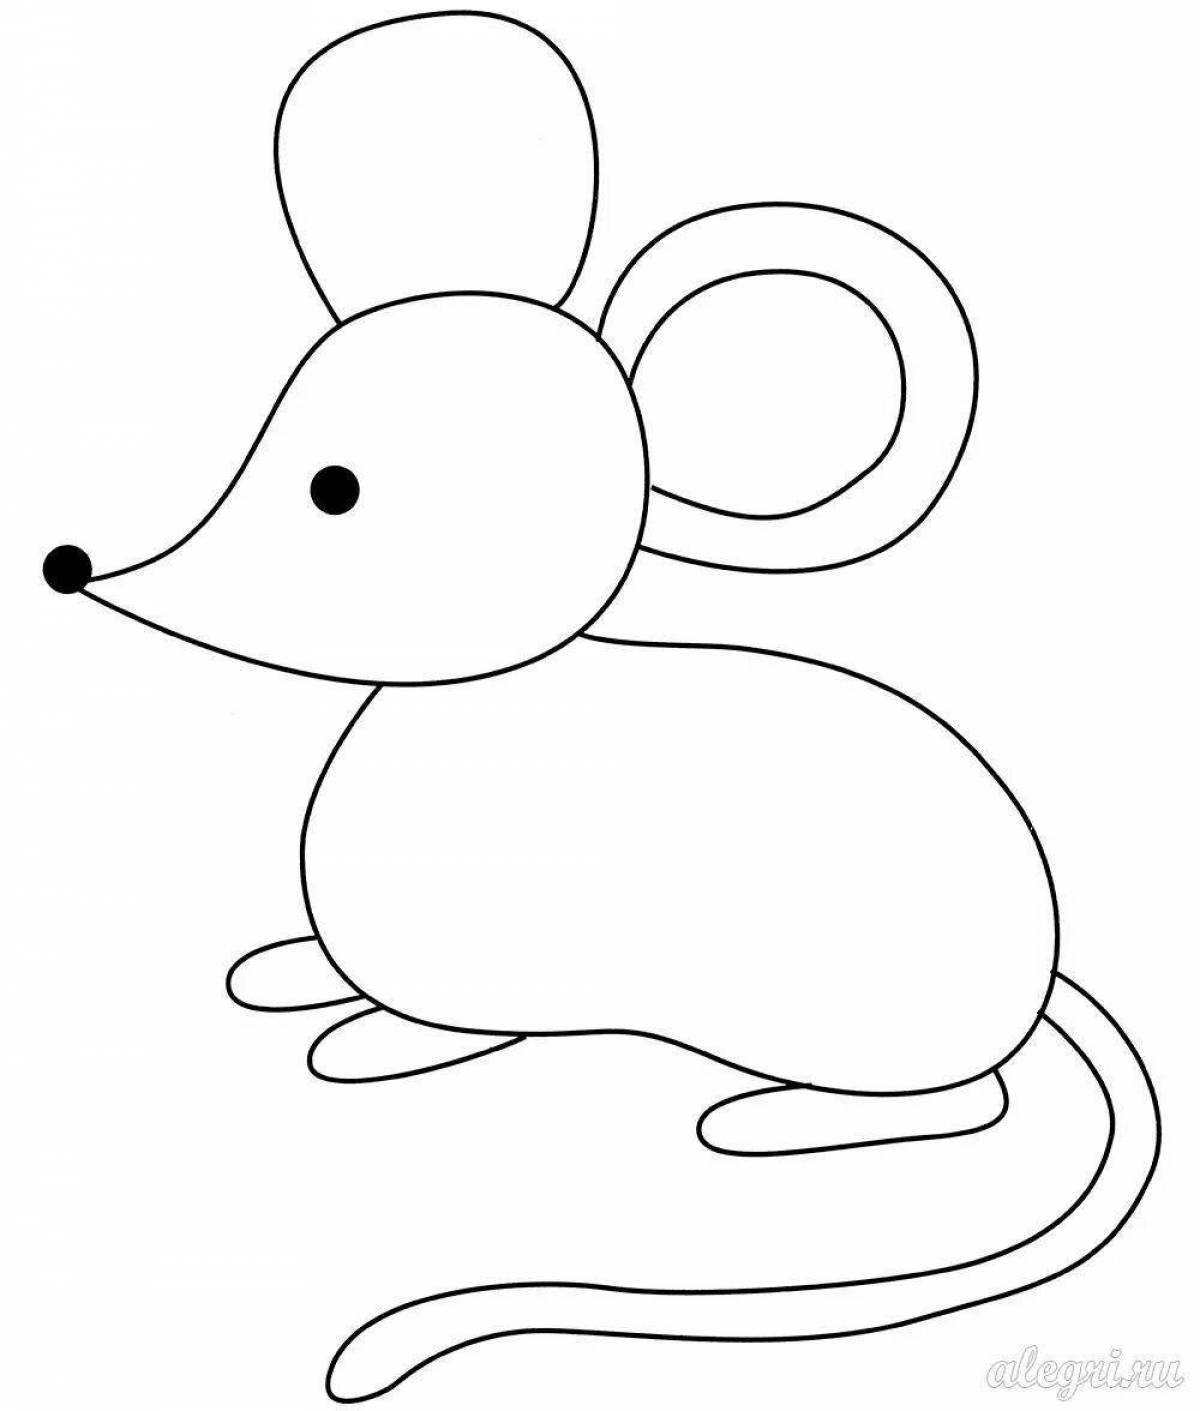 Bright mouse norushka coloring book